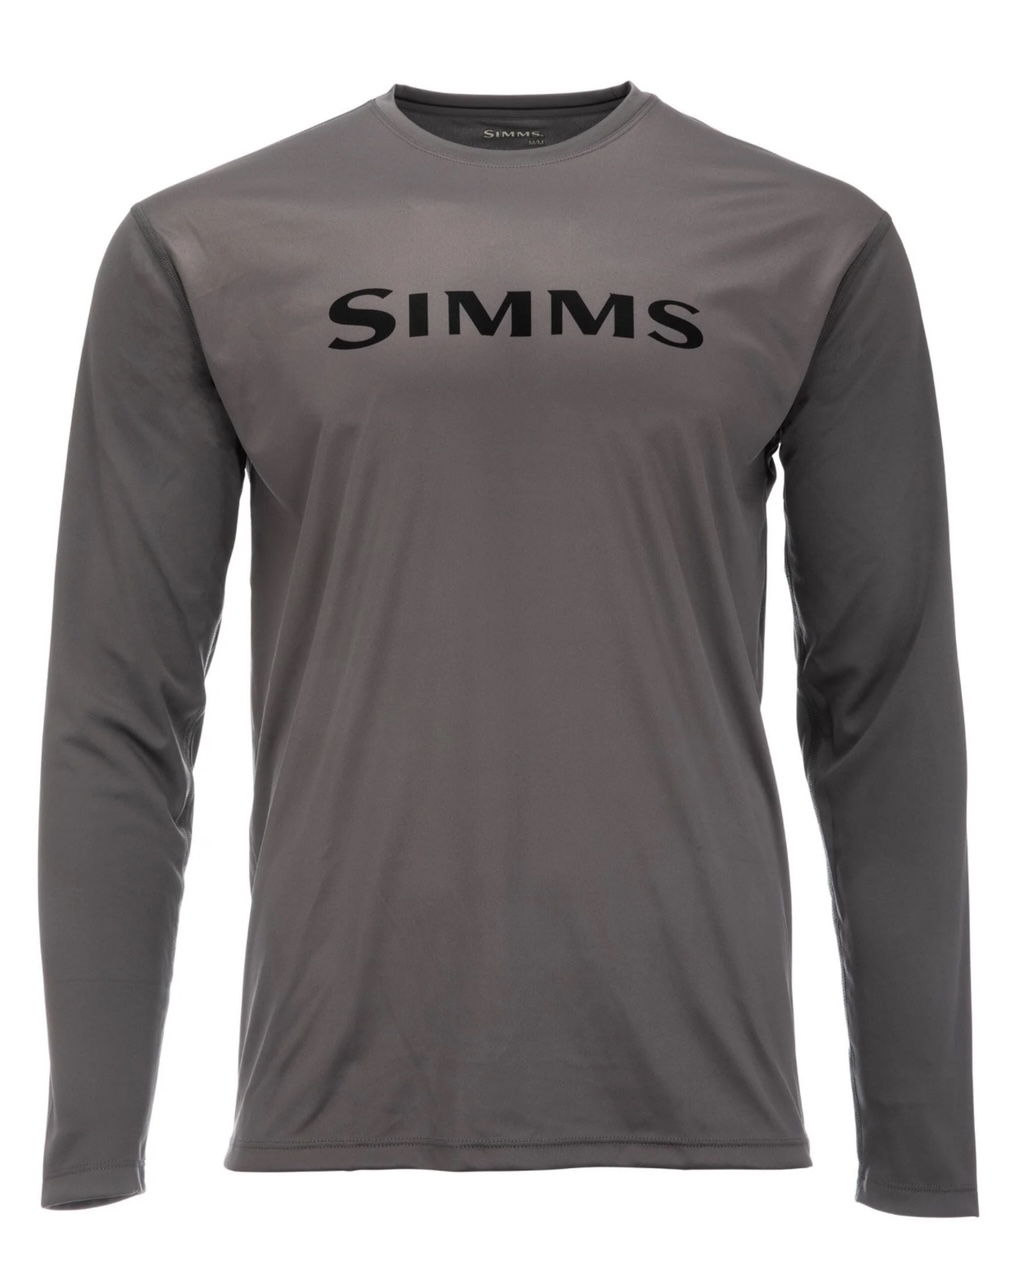 Simms M's Tech Tee - Steel - Large